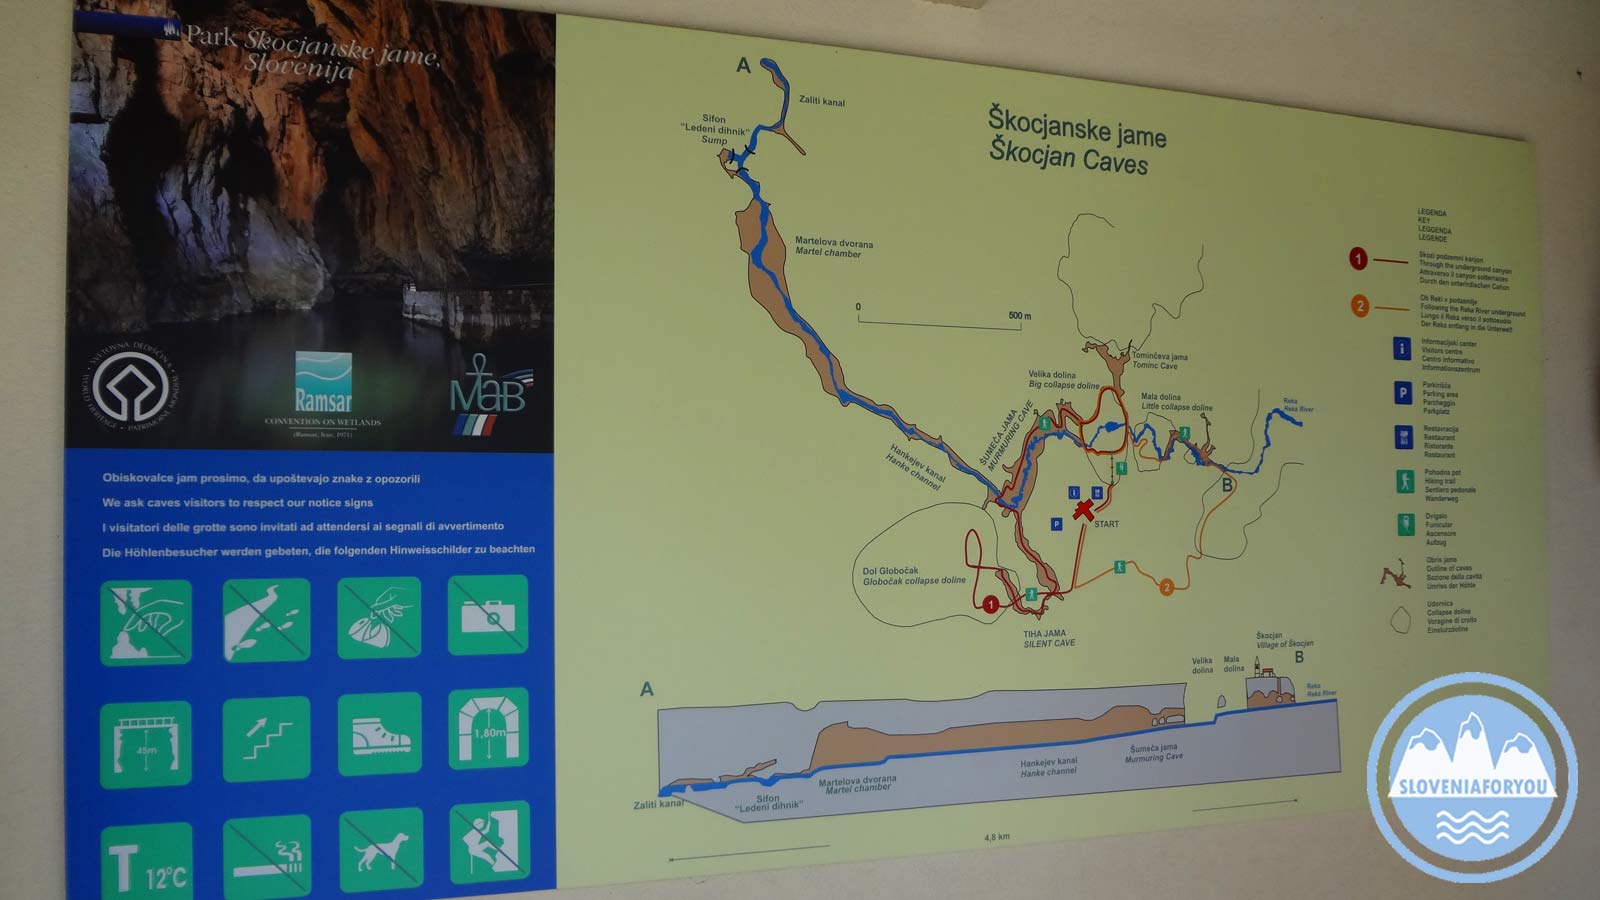 Information board, Škocjan Caves - Sloveniaforyou